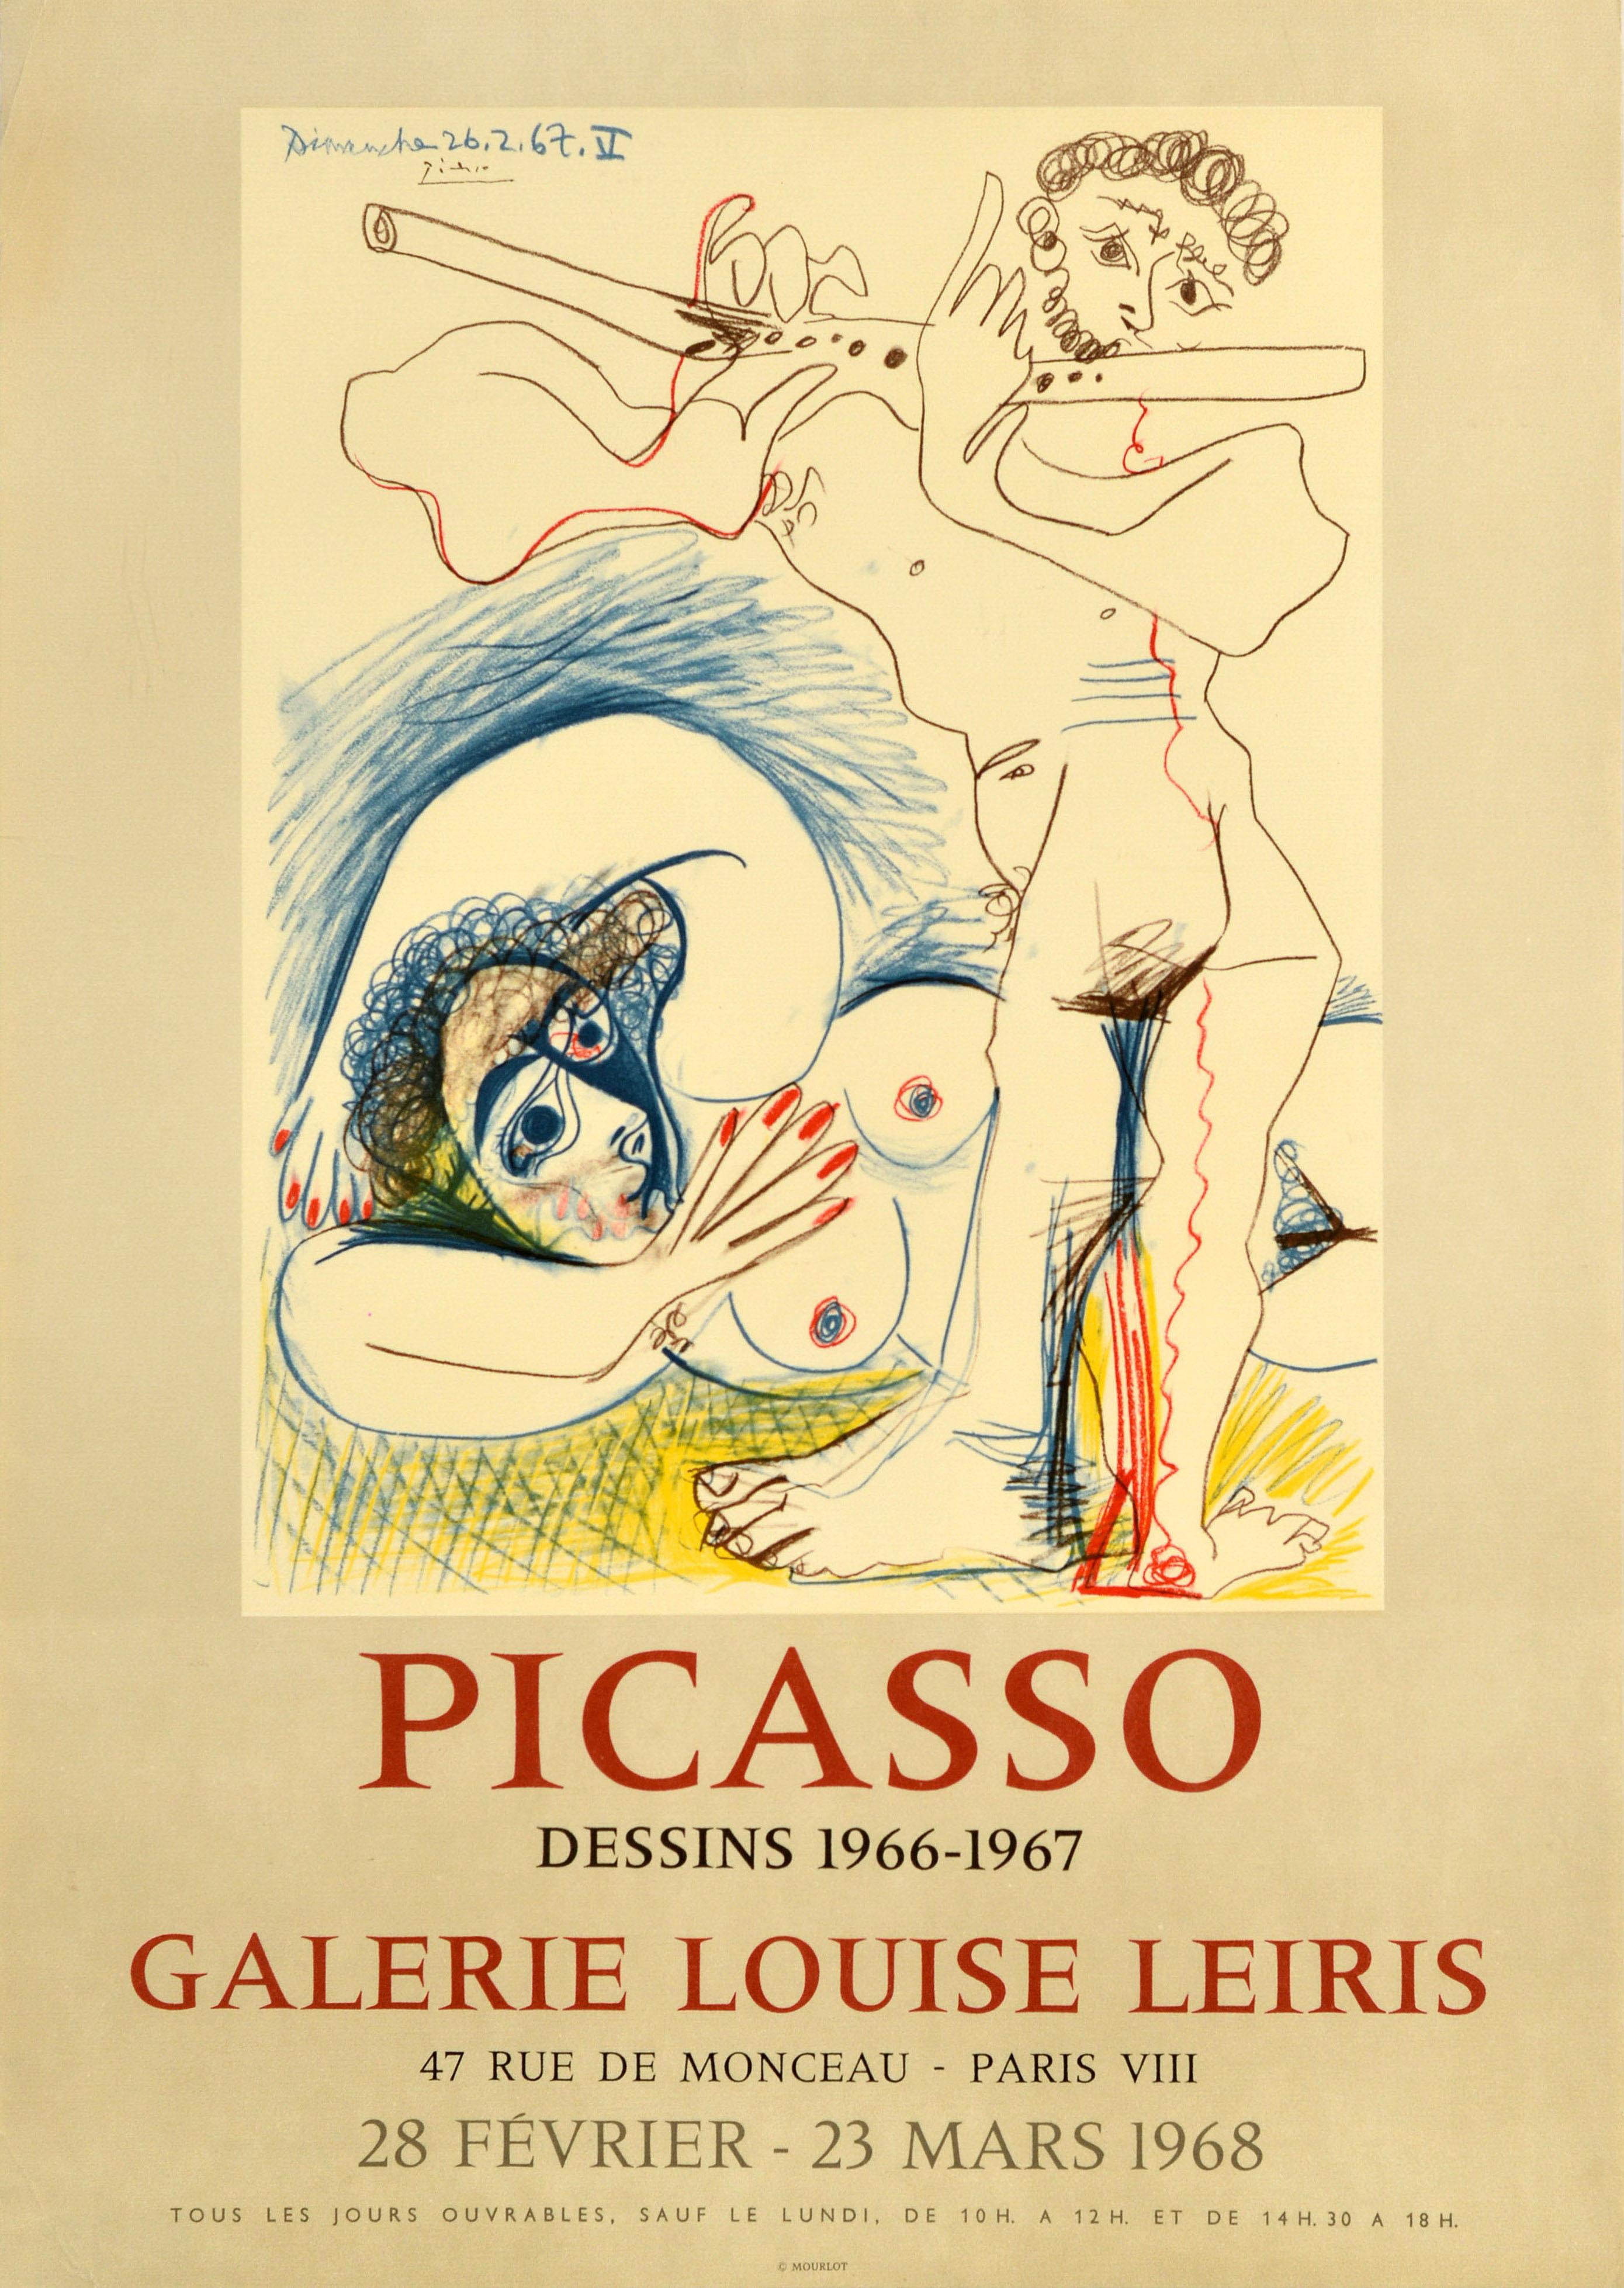 Pablo Picasso Print – Original Vintage Art Exhibition Poster Picasso Drawings Galerie Louise Leiris